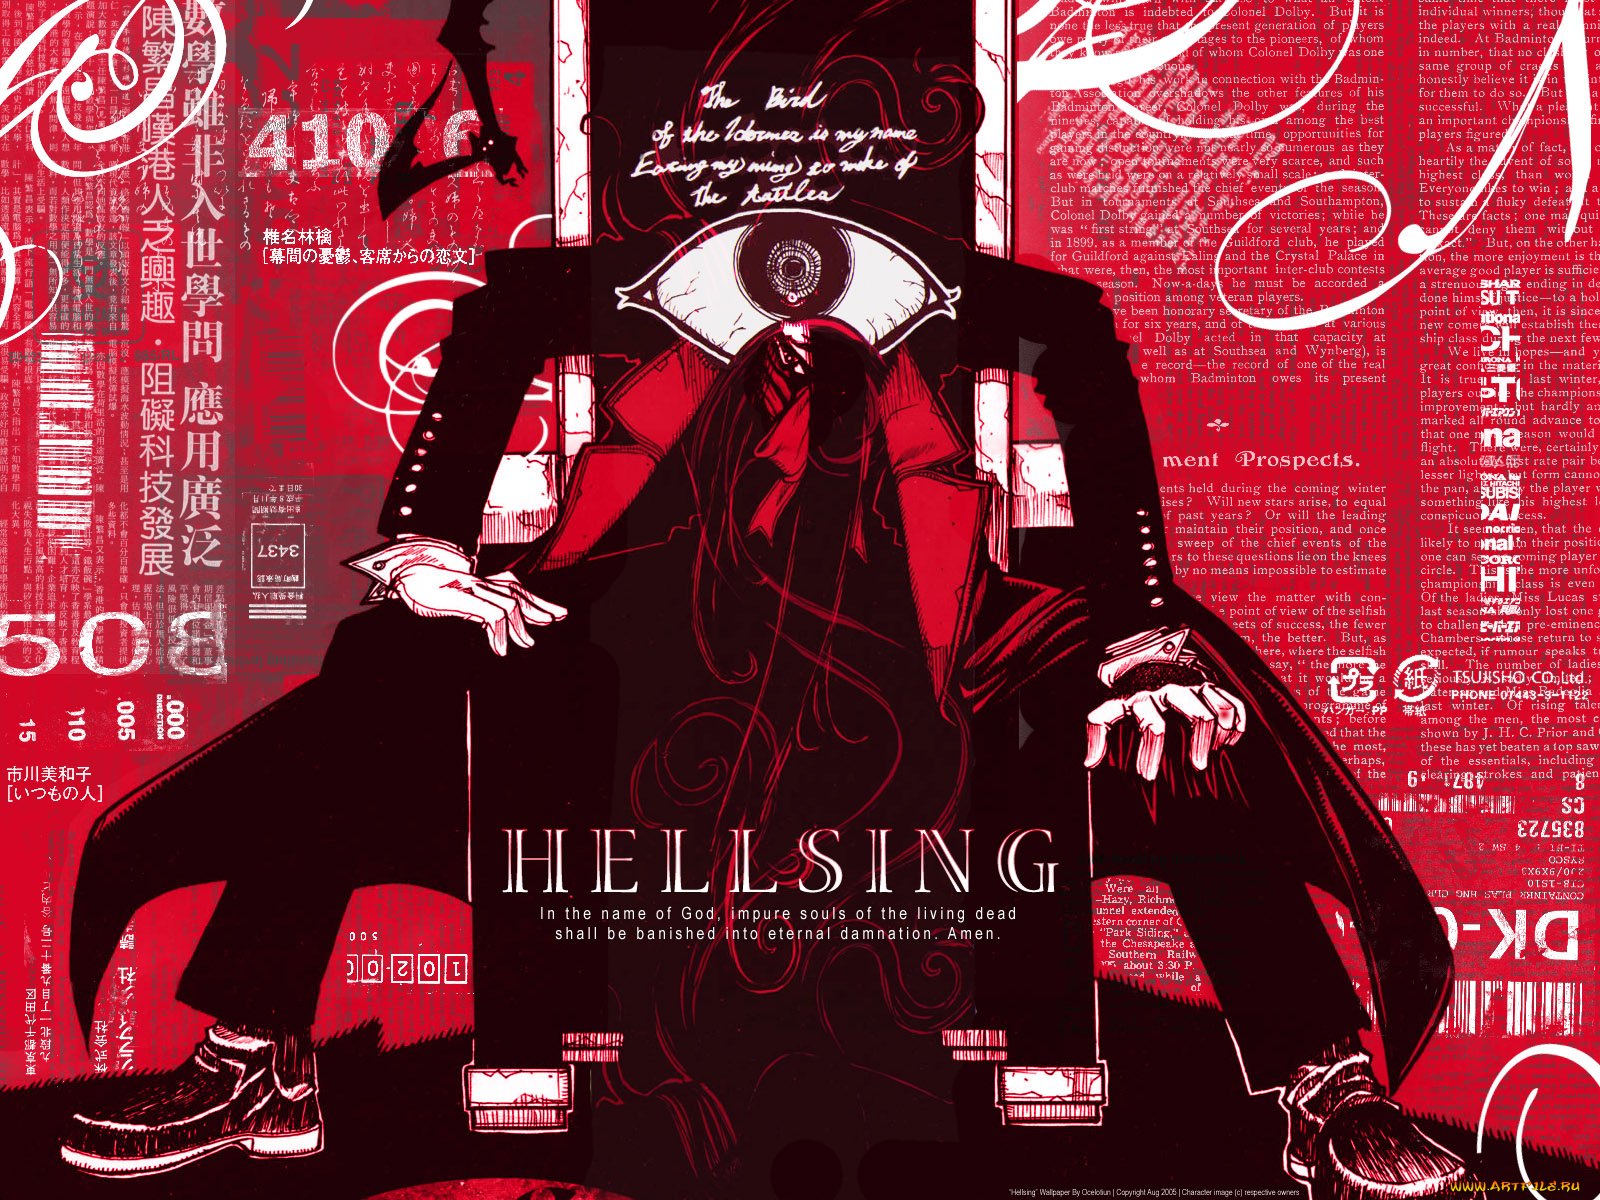 аниме, hellsing